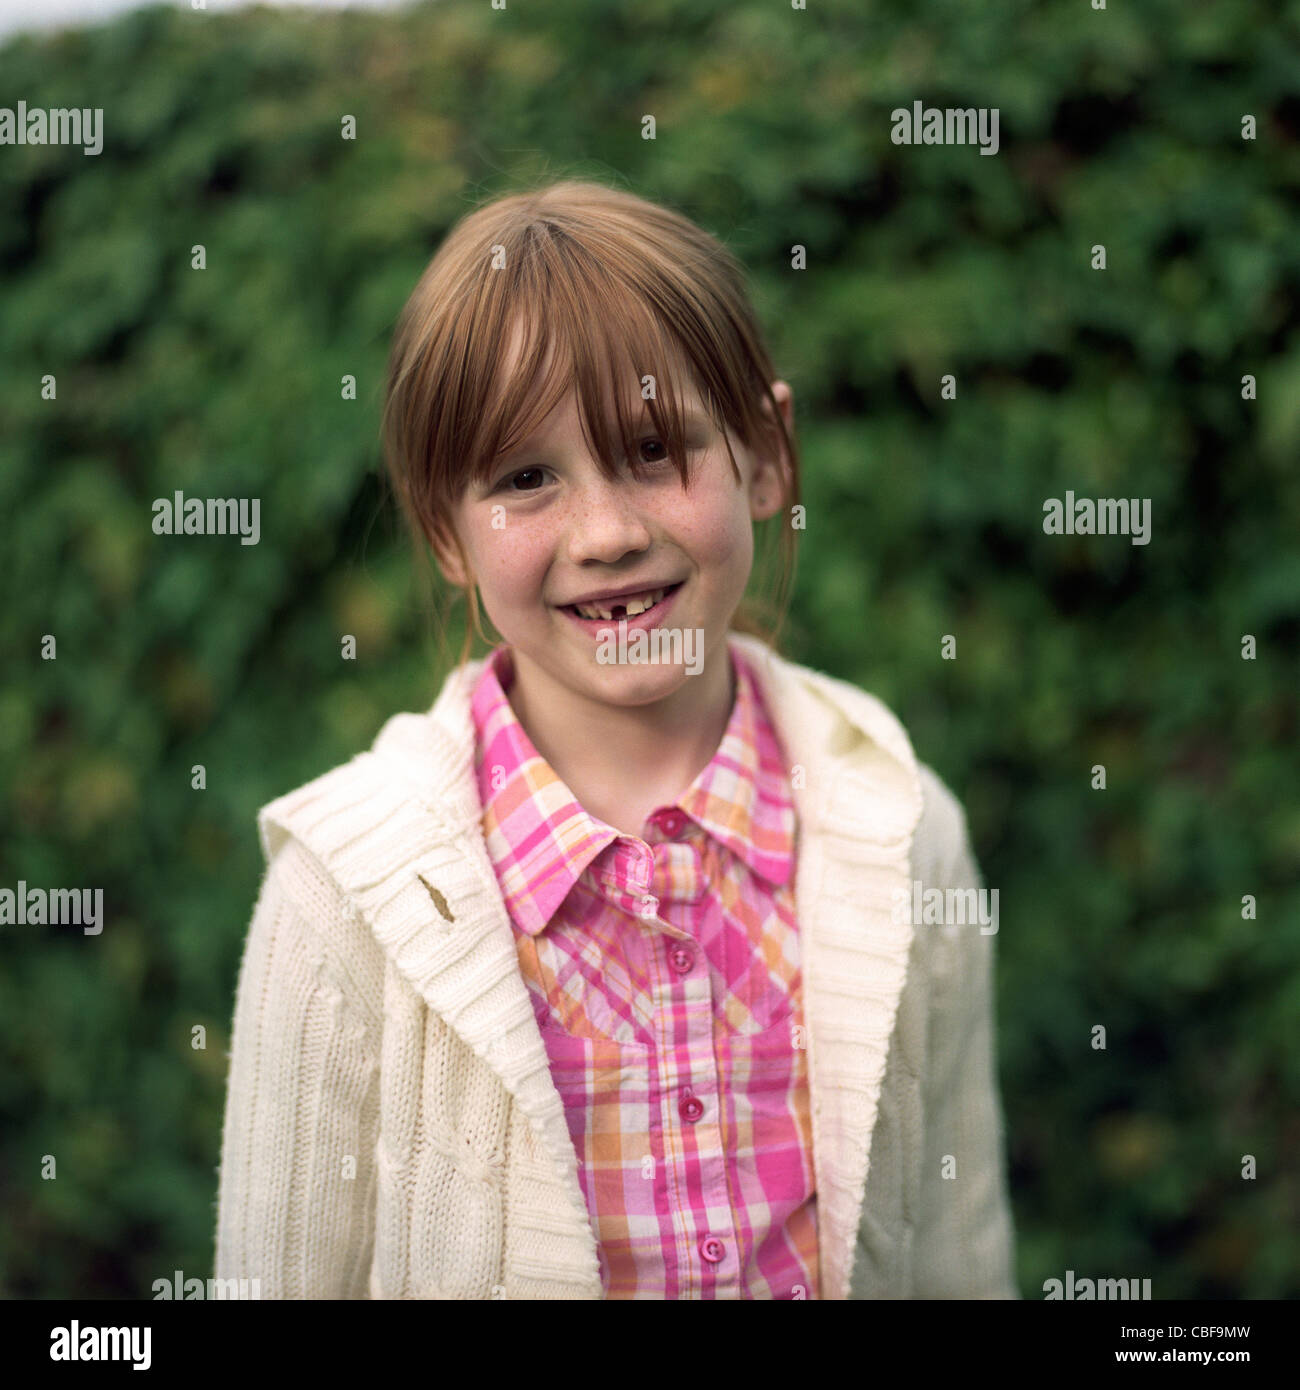 Girl standing outdoors portrait Stock Photo